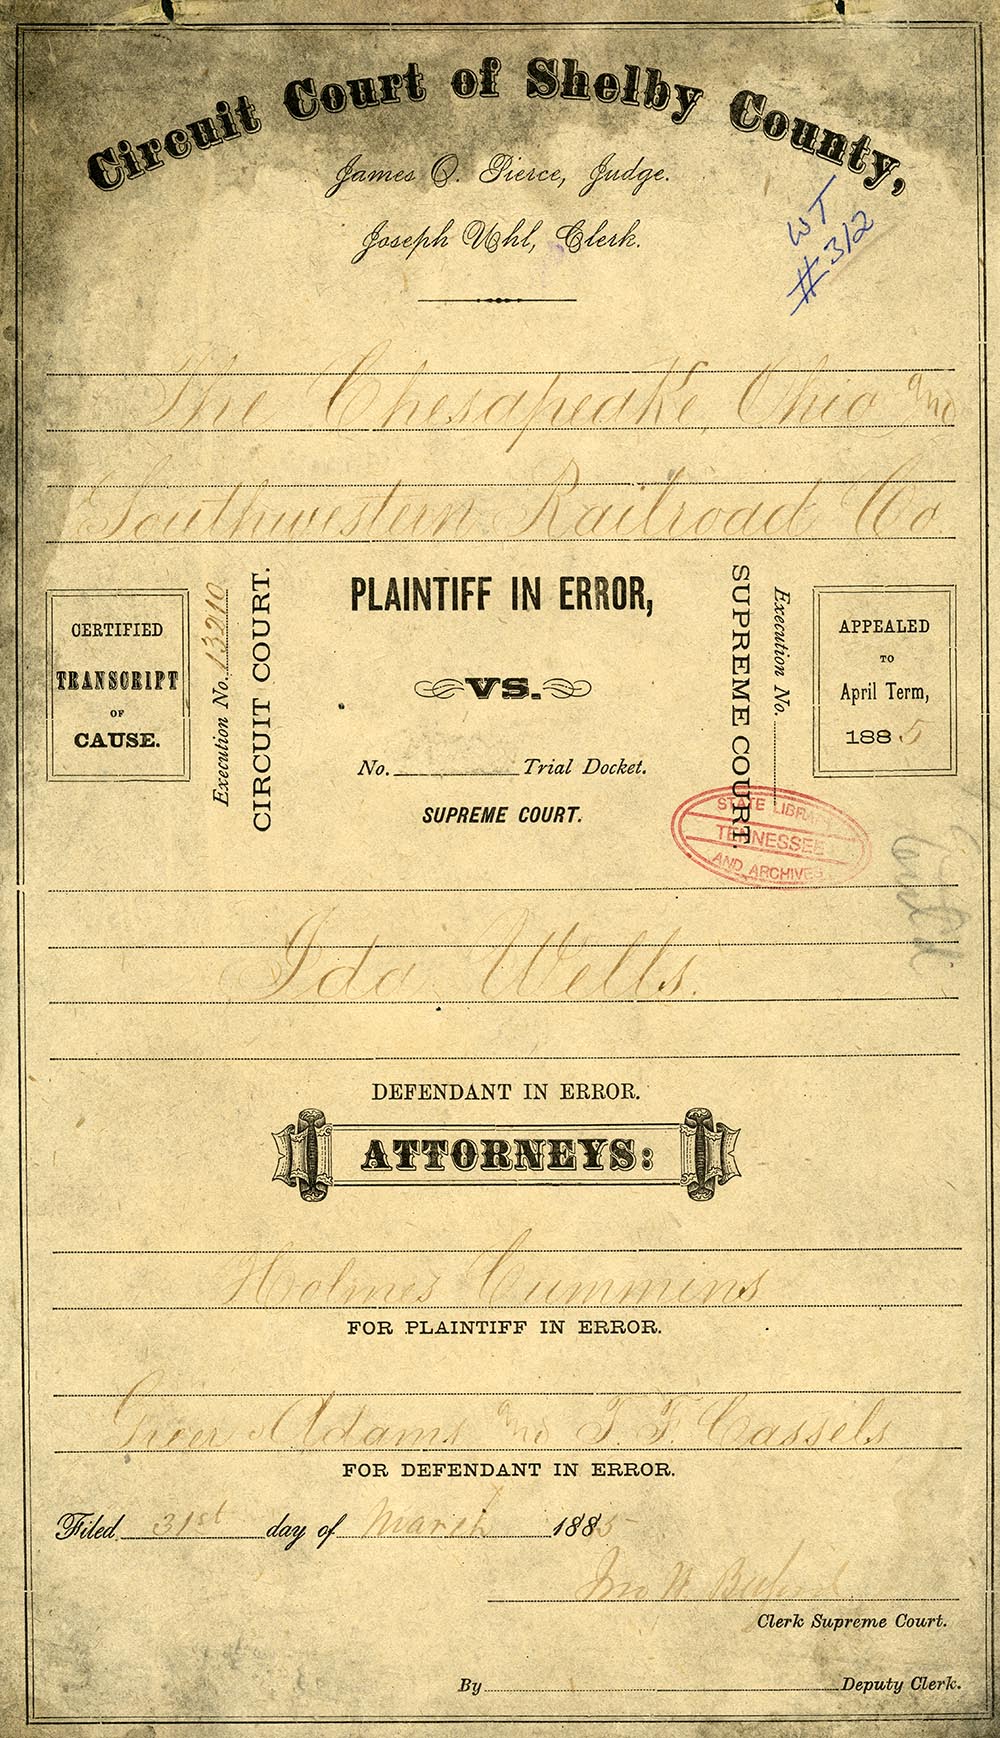 The Chesapeake, Ohio, and Southwestern Railroad Company vs. Ida B. Wells case